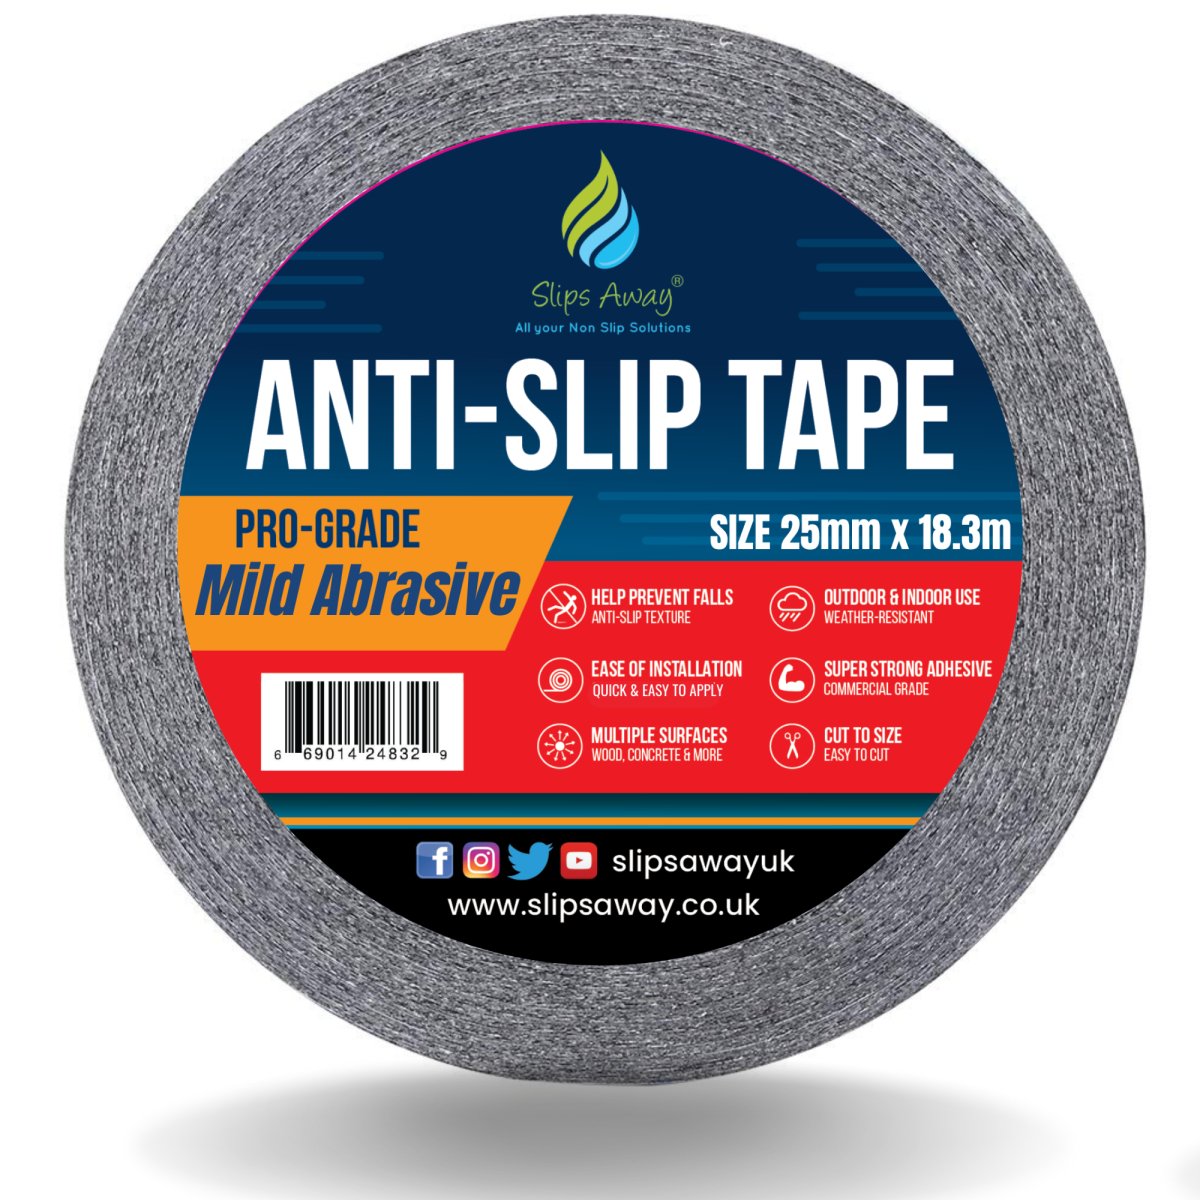 Mild Abrasive Safety-Grip Anti Slip Tape That Require a Milder Less Harsh Grip - Slips Away - Anti slip tape - H3432N 25MM X 18.3M -